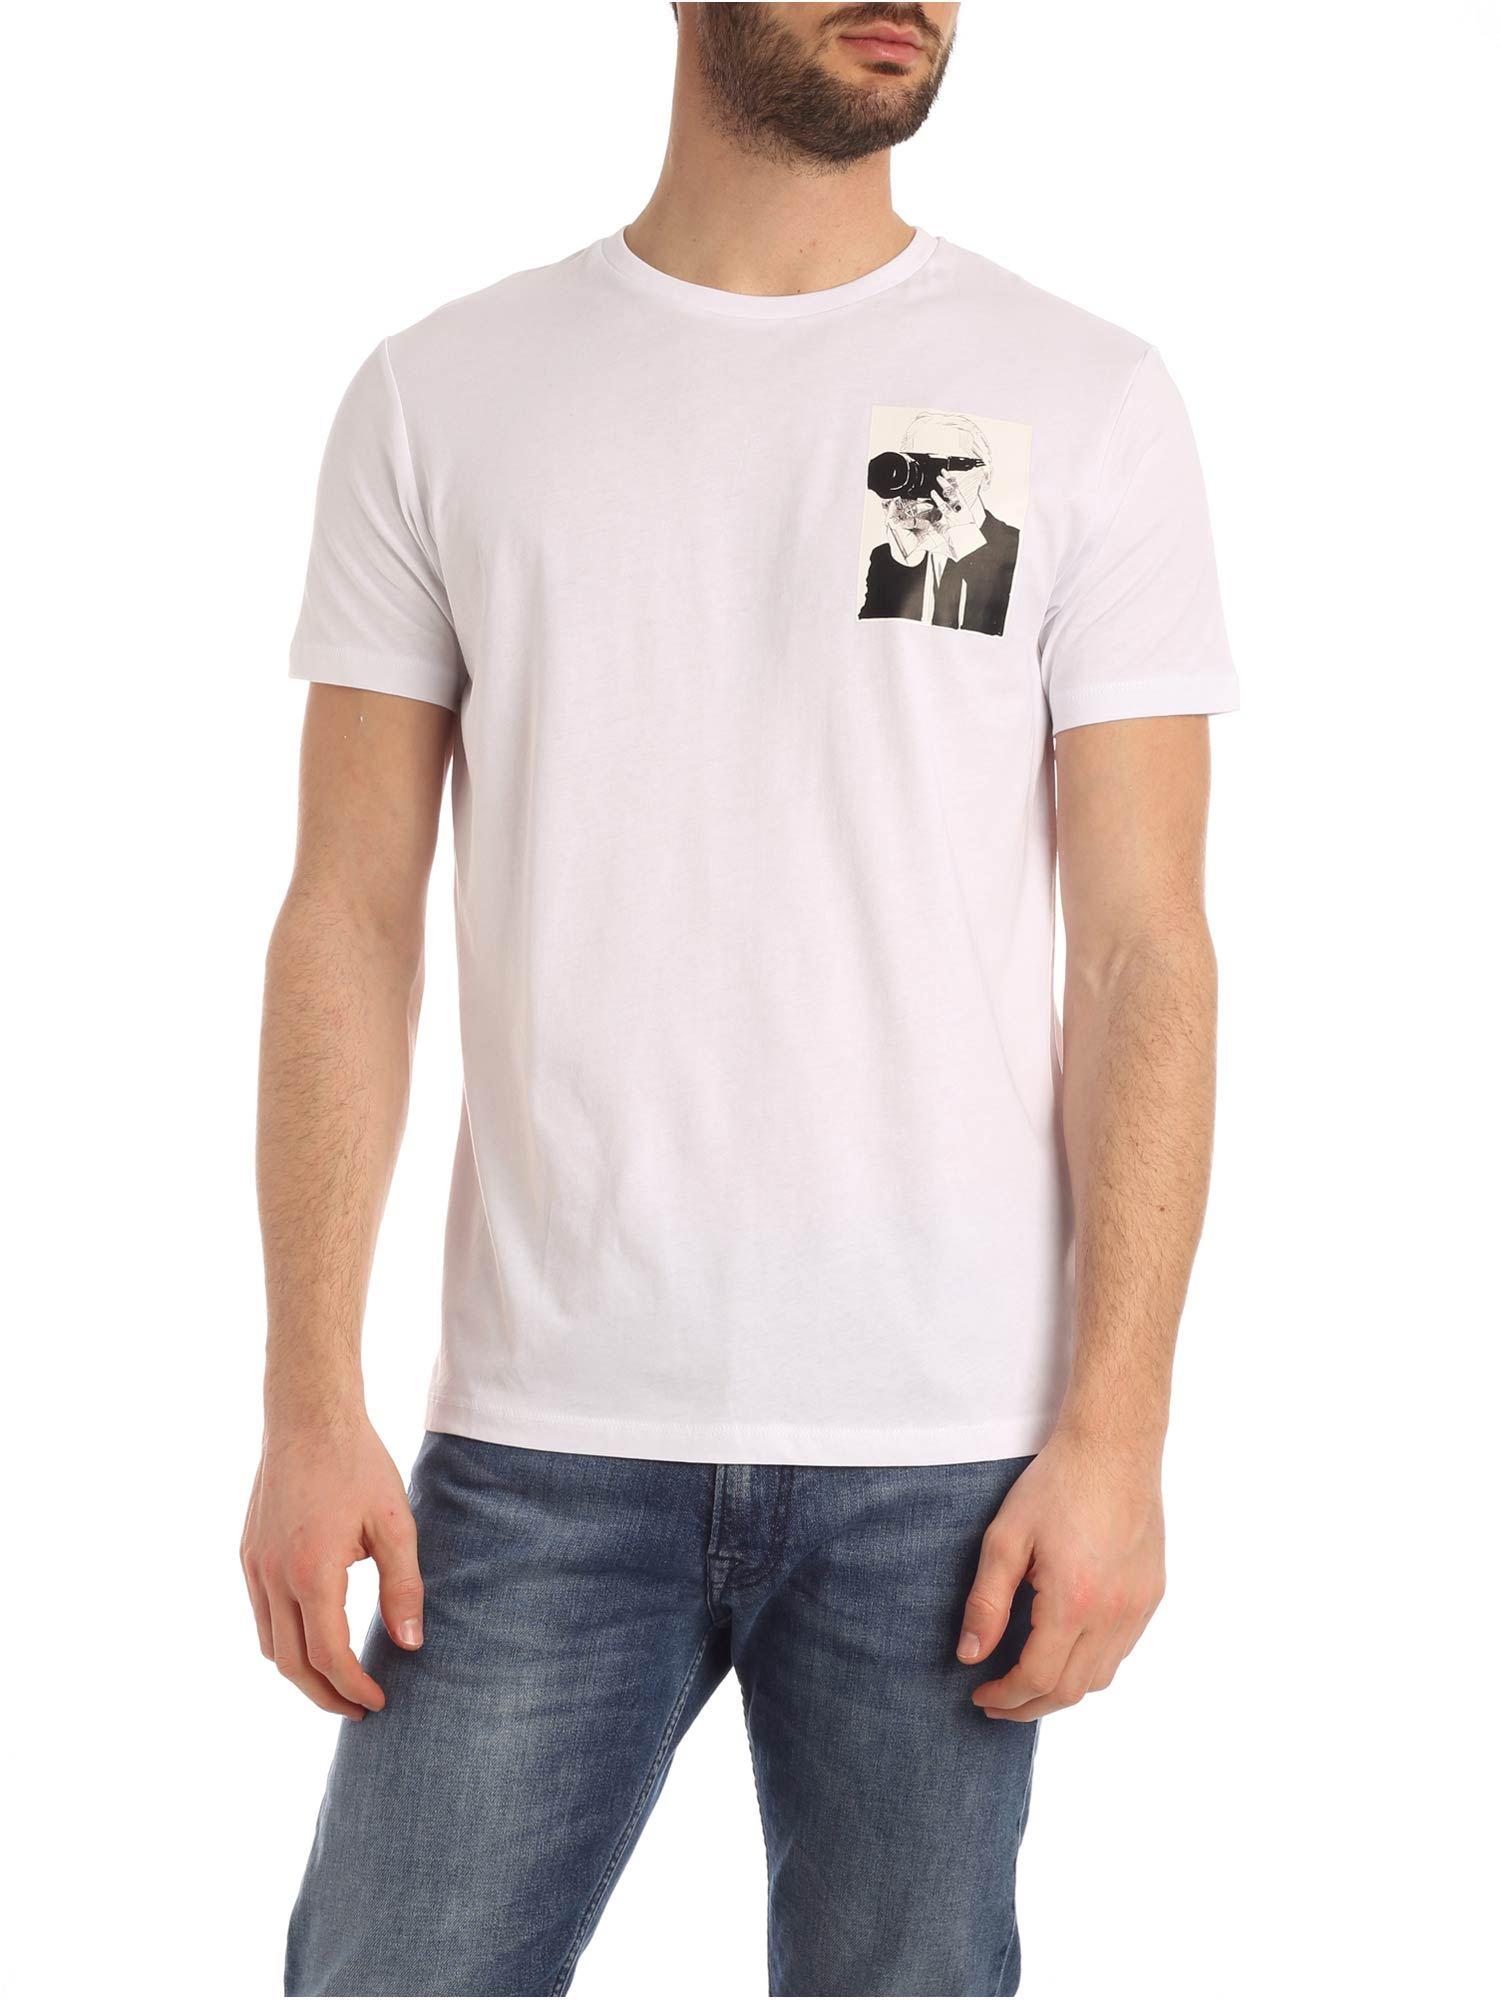 Karl Lagerfeld Cotton Karl Legend T-shirt in White for Men - Lyst